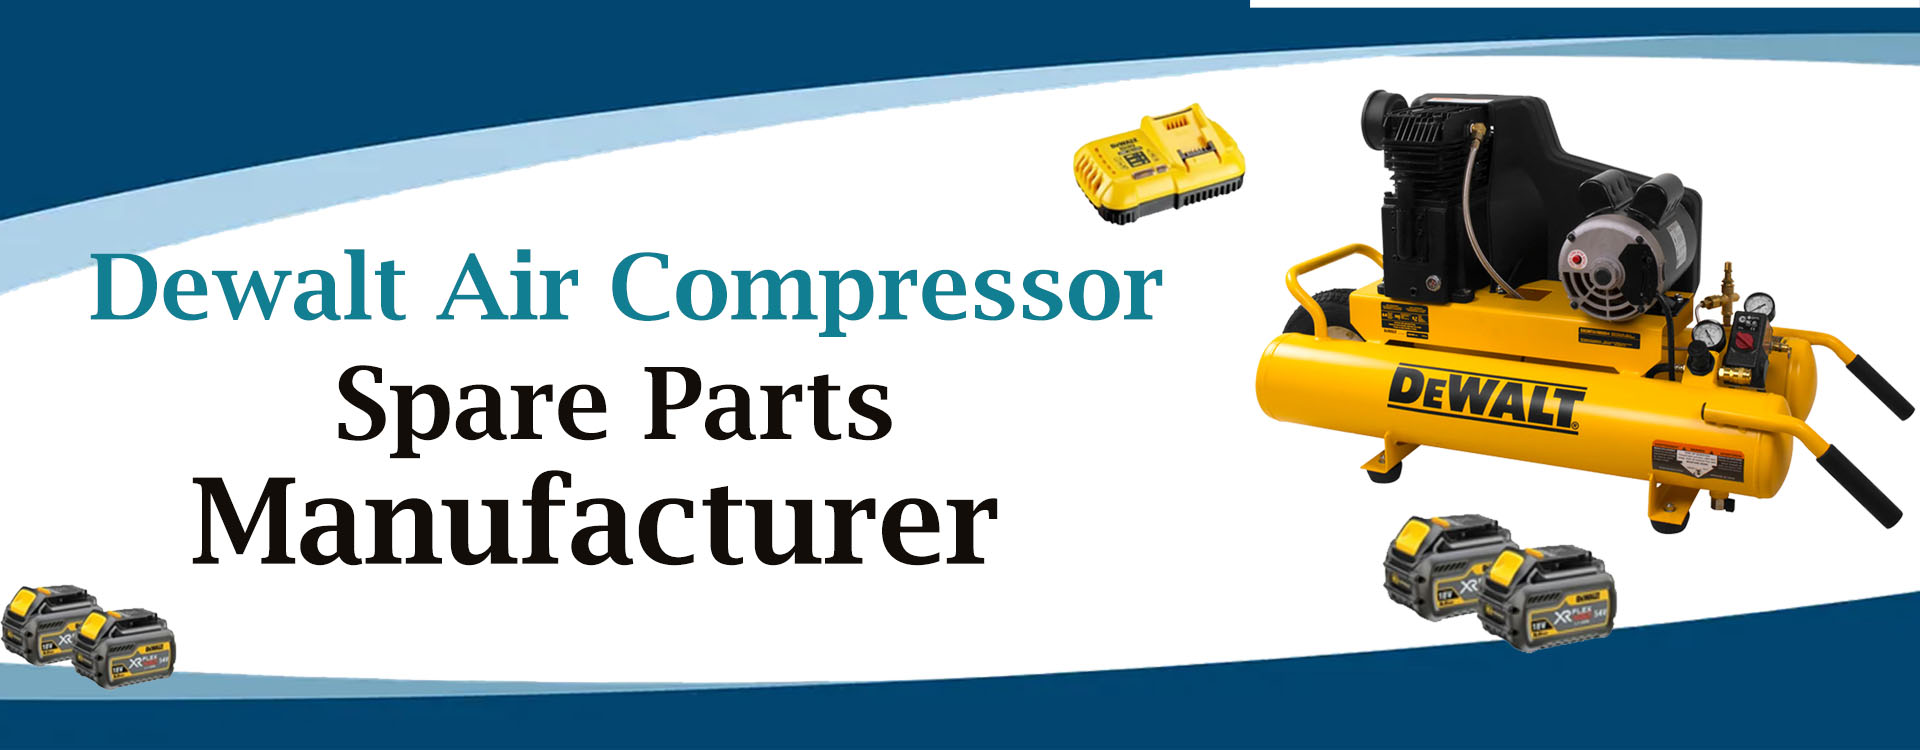 Dewalt Compressor Components  Part Manufacturer & Supplier In india